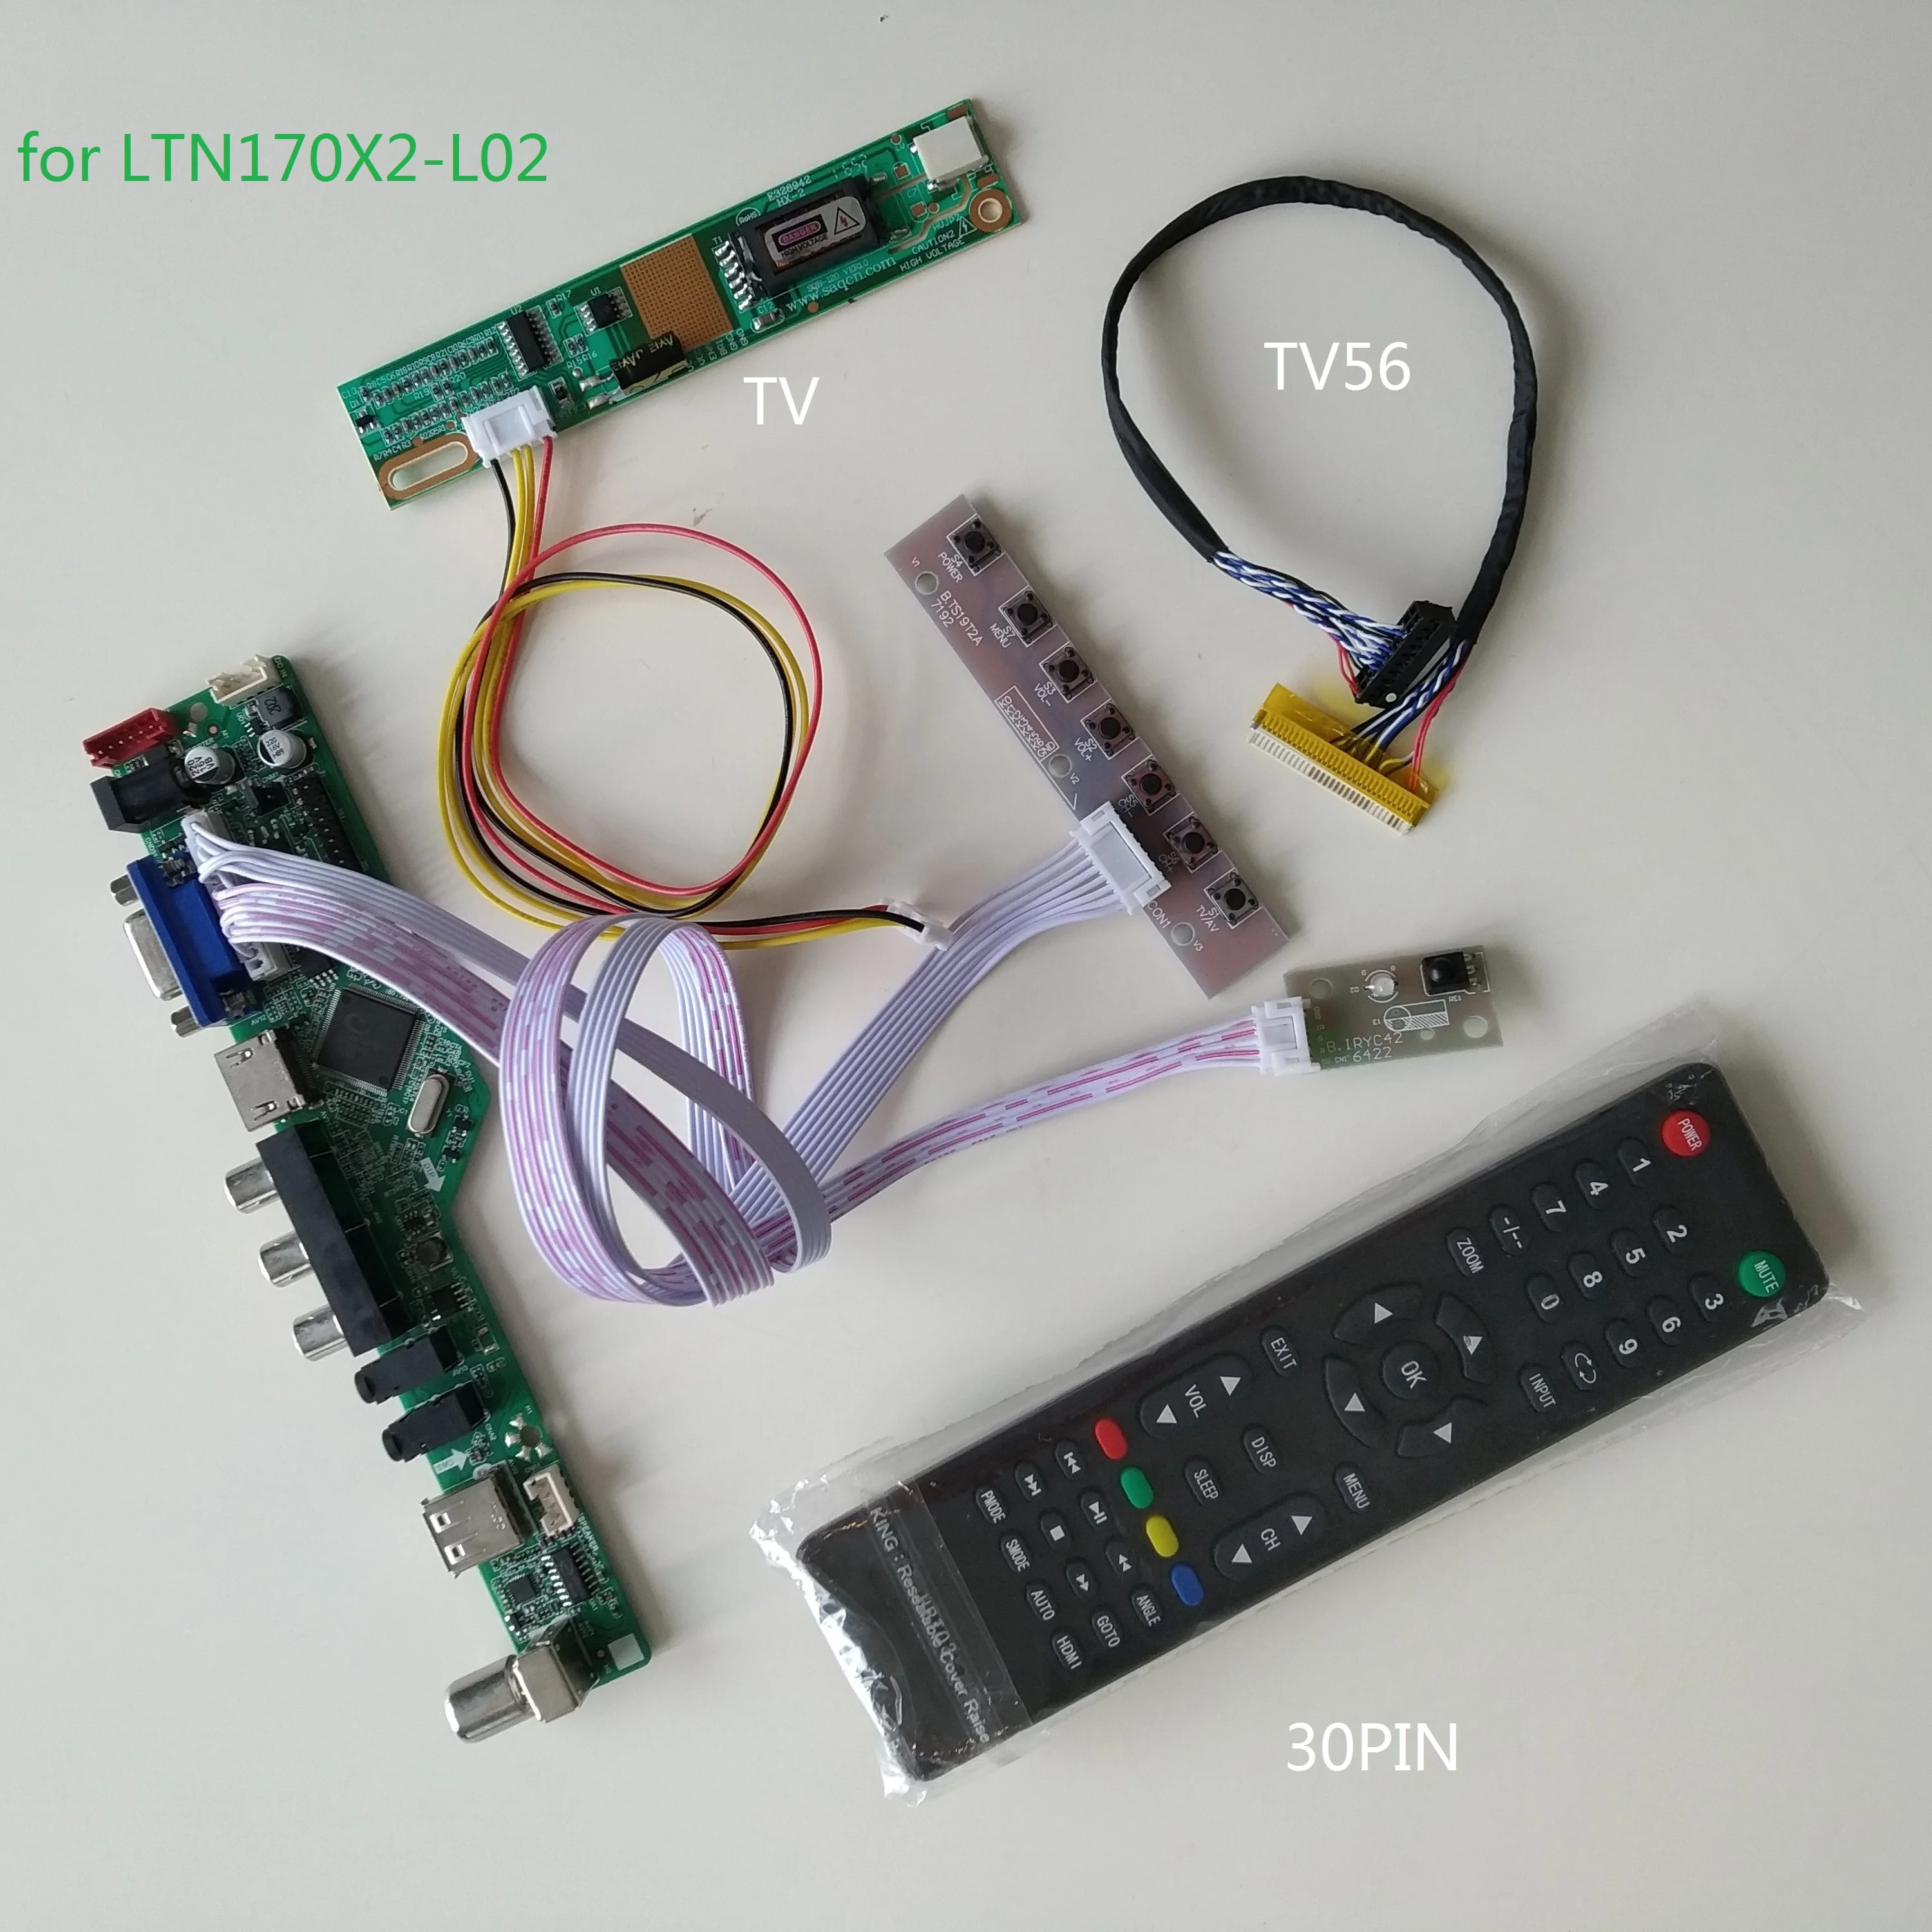 

1 CCFL lamps USB LCD LED VGA AV AUDIO TV Controller Board kit DIY For 17.0" LTN170X2-L02 30pin 1440*900 monitor card tv56